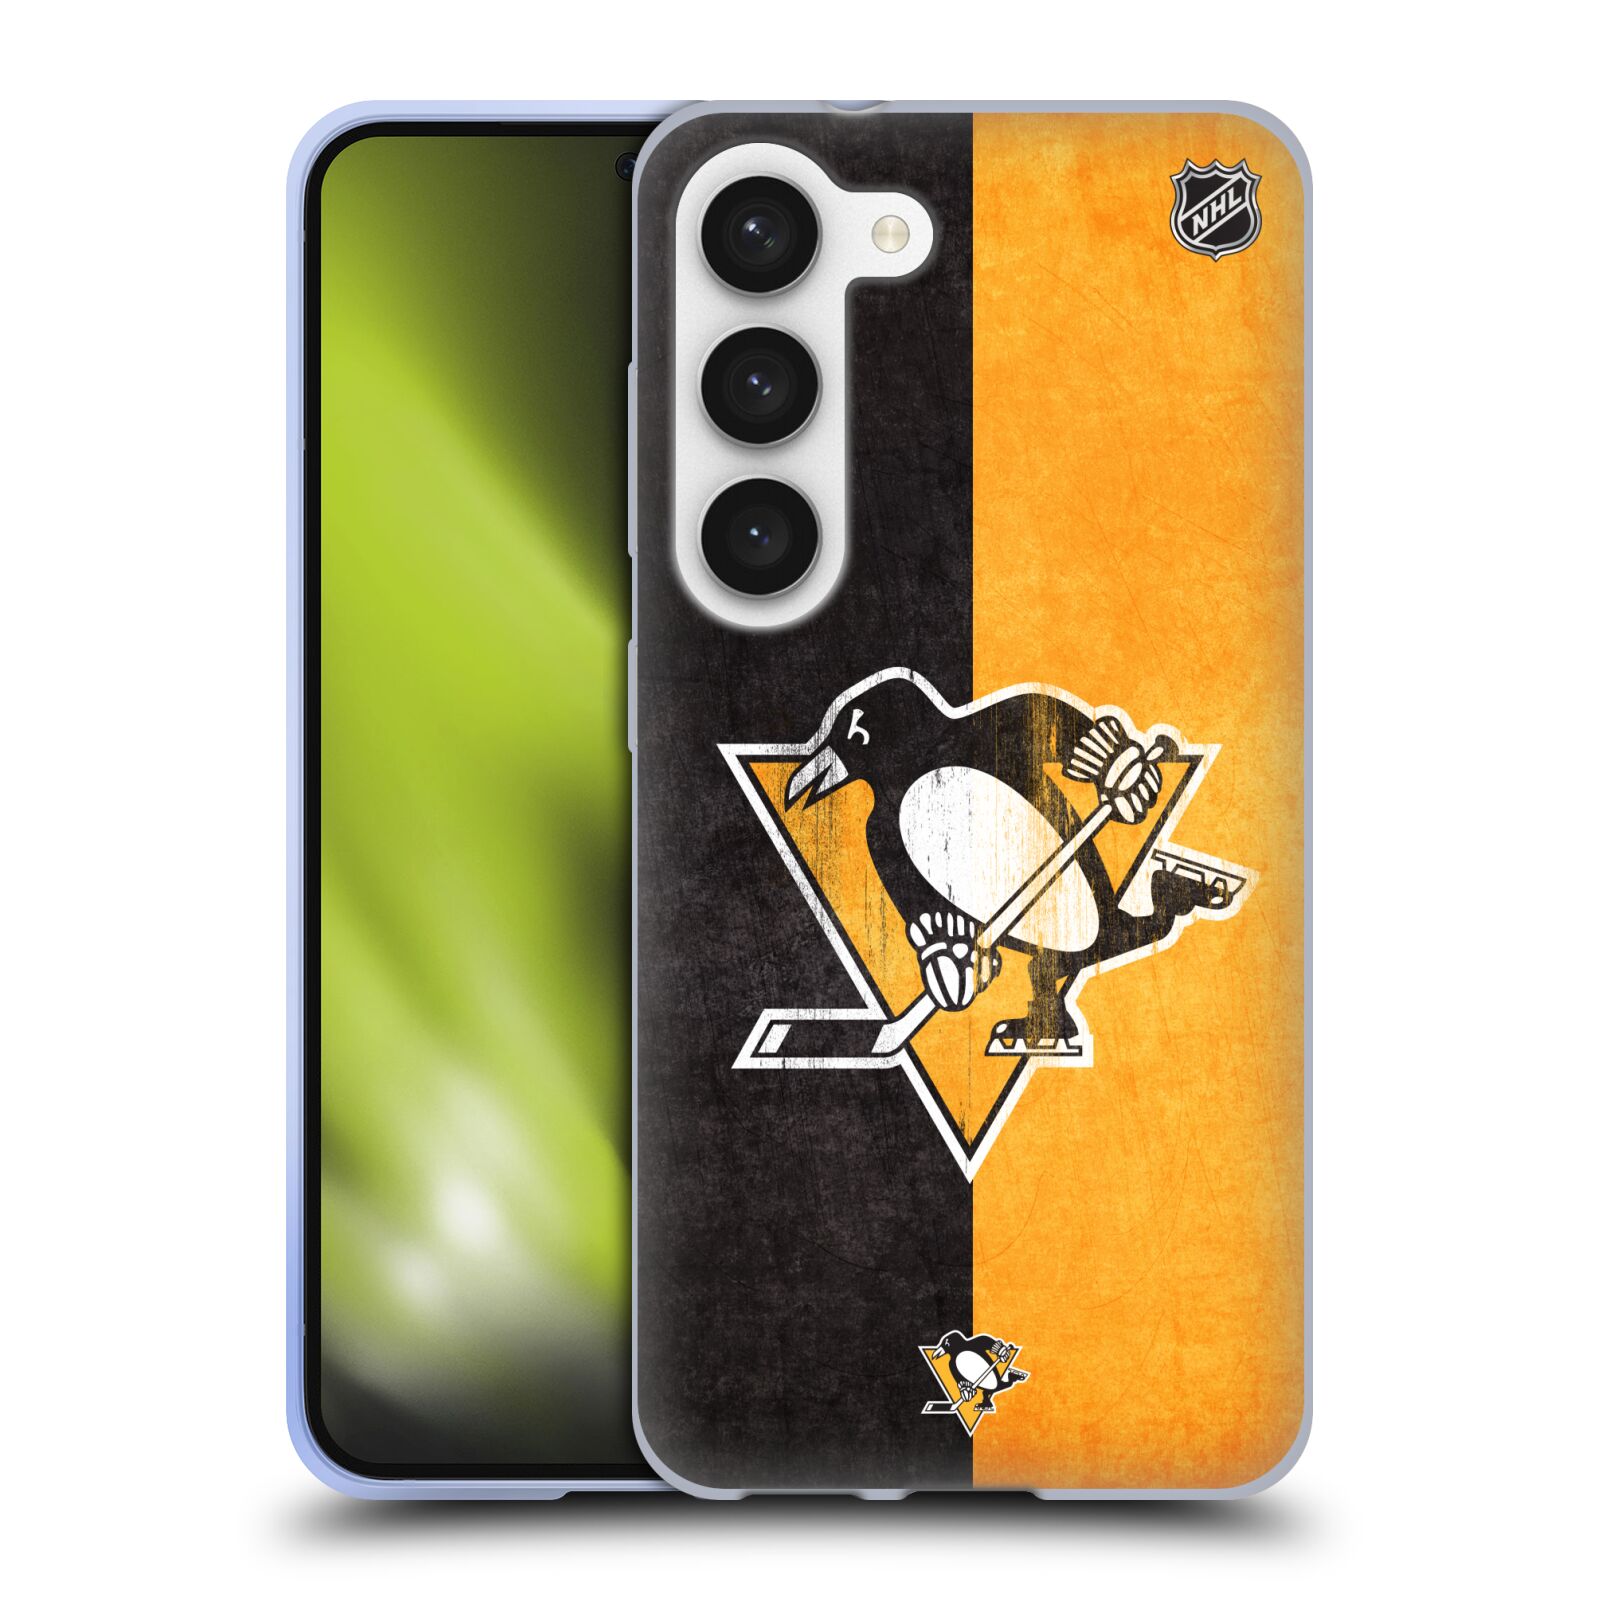 Silikonové pouzdro na mobil Samsung Galaxy S23 - NHL - Půlené logo Pittsburgh Penguins (Silikonový kryt, obal, pouzdro na mobilní telefon Samsung Galaxy S23 s licencovaným motivem NHL - Půlené logo Pittsburgh Penguins)